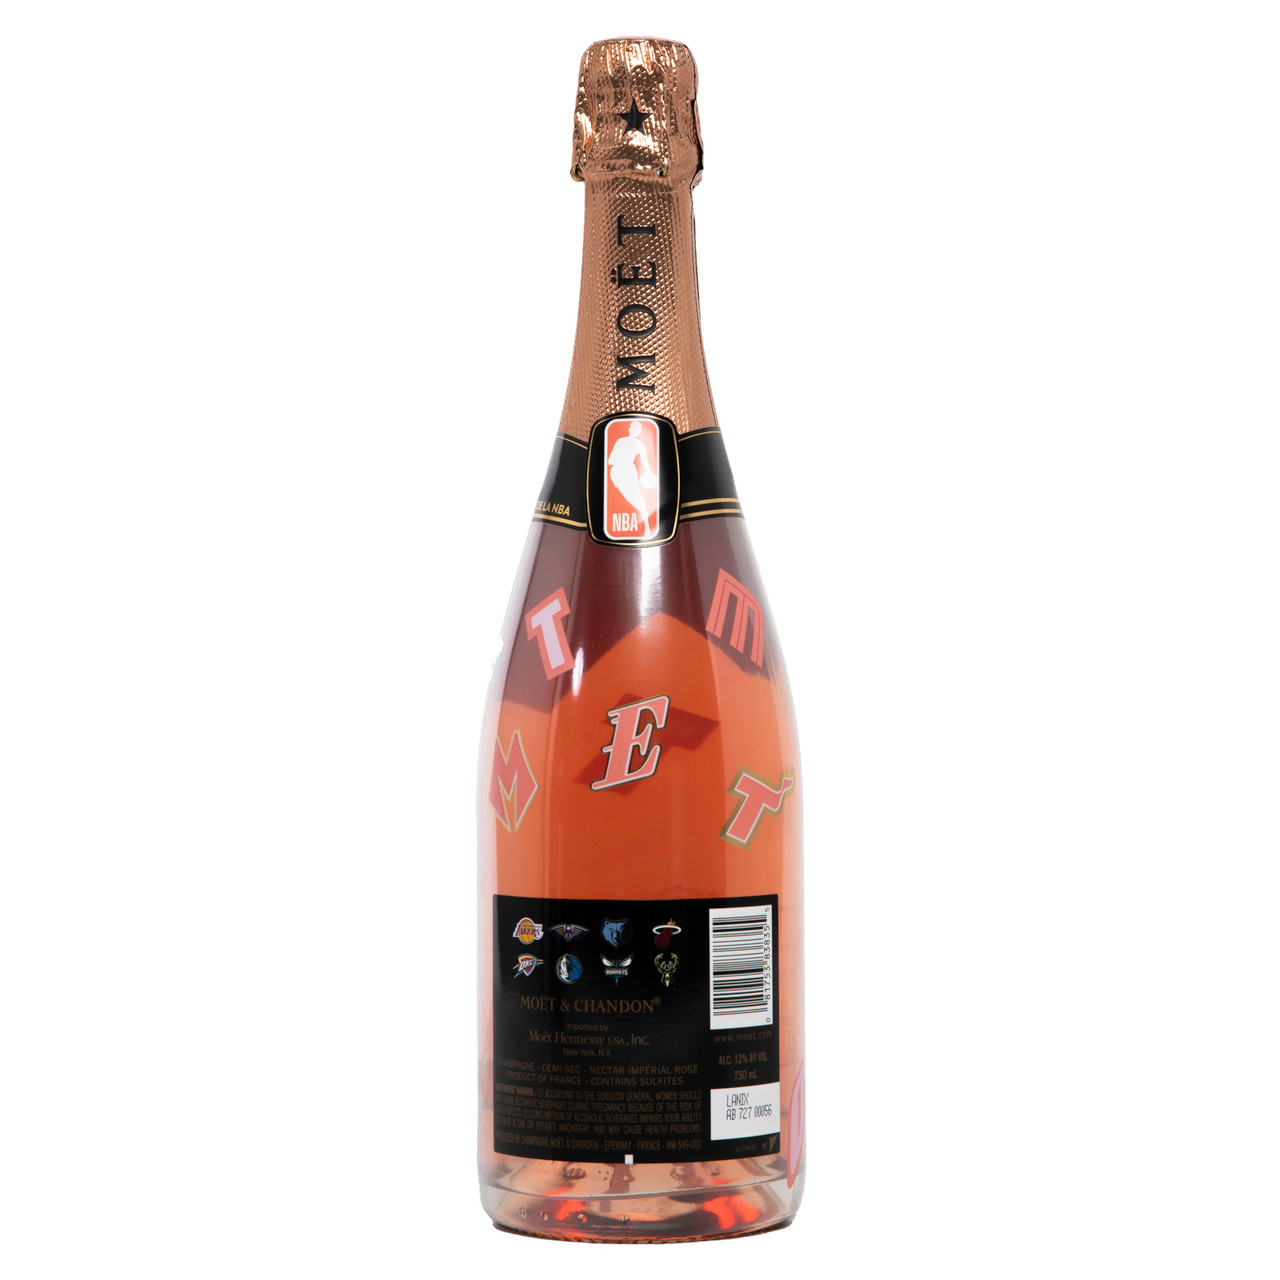 Moet & Chandon Nectar Imperial Rose Champagne  - 1.5 L bottle